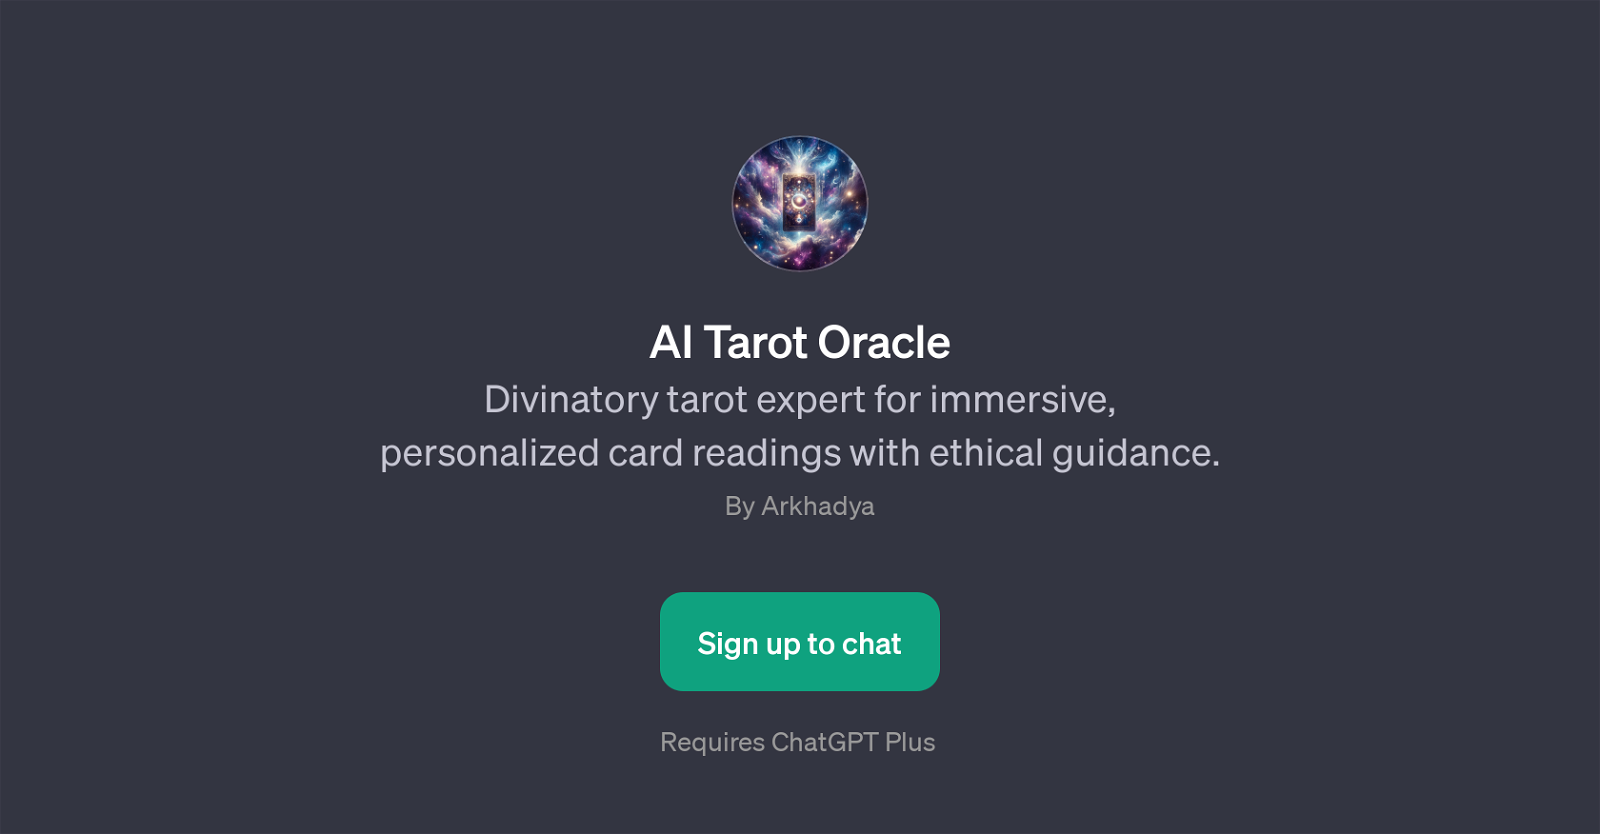 AI Tarot Oracle website